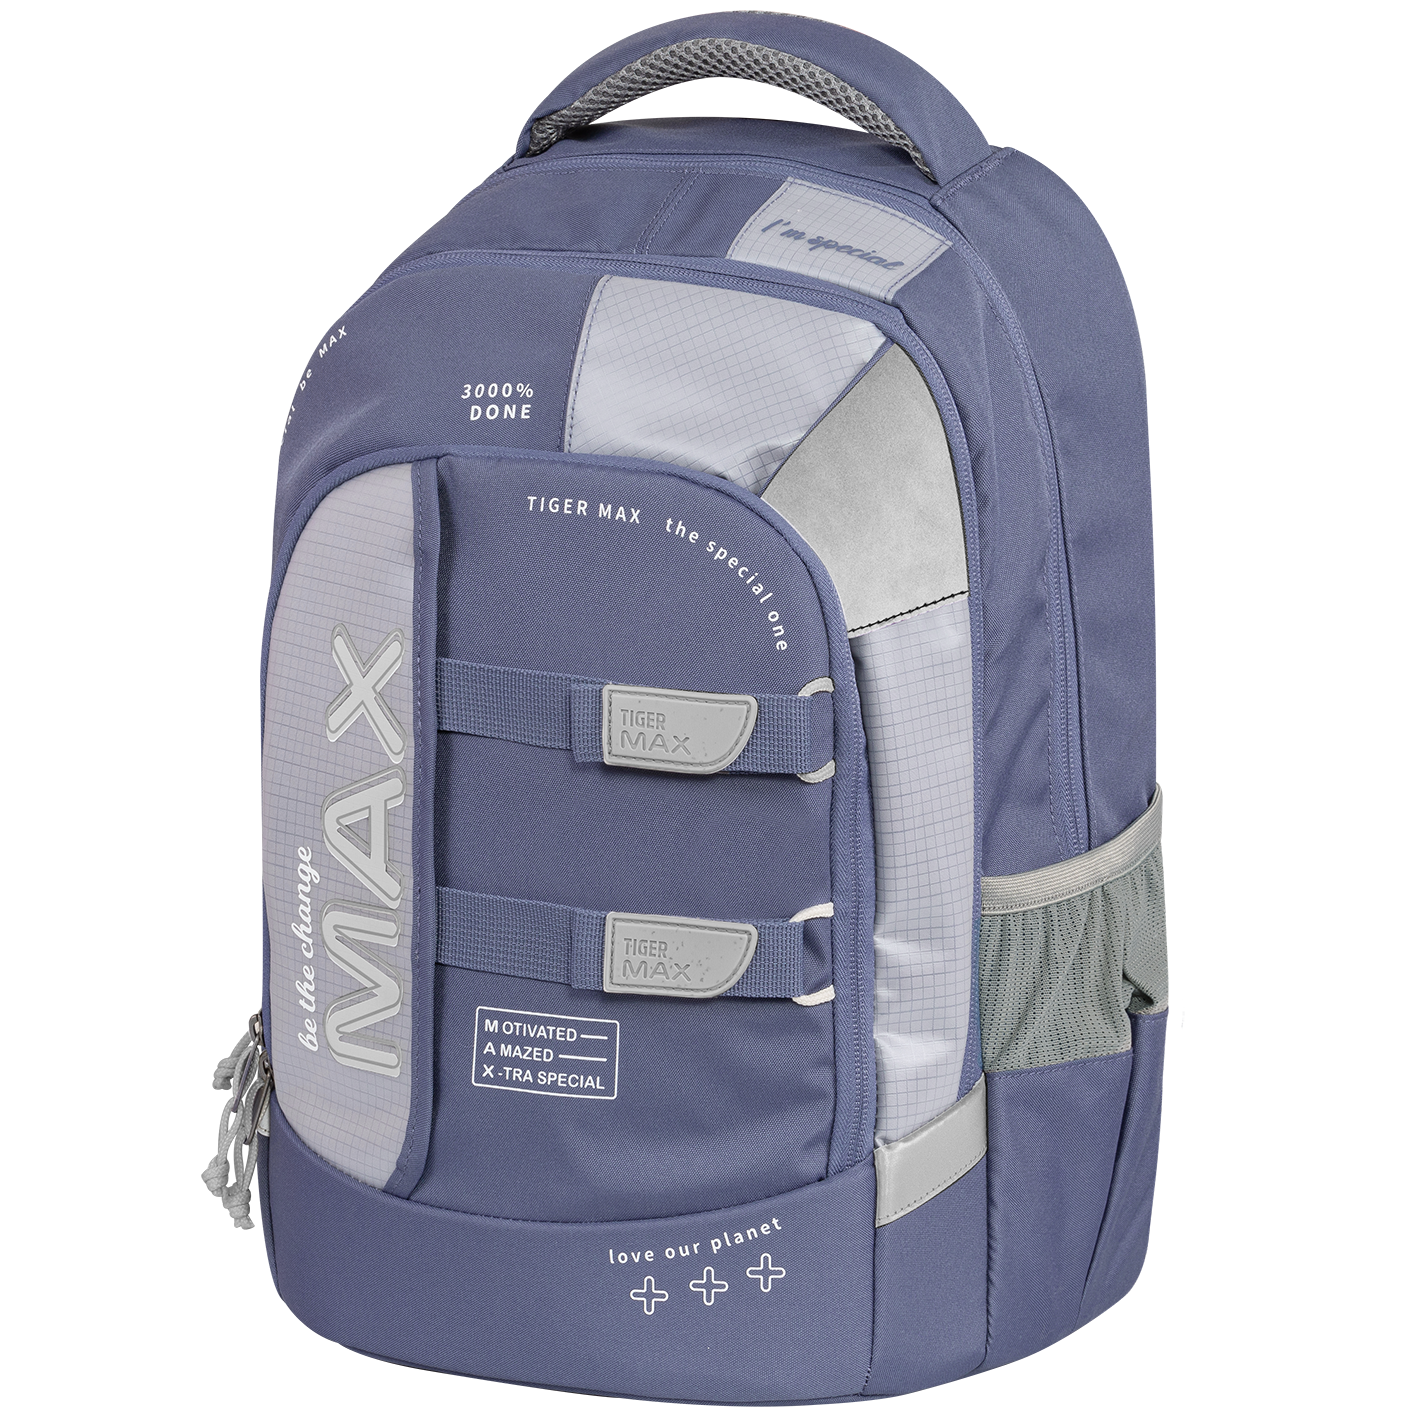 Ba Lô Chống Gù Max Backpack Pro 2 - Cloudy - Special Edition - Tiger Max TMMX-041A